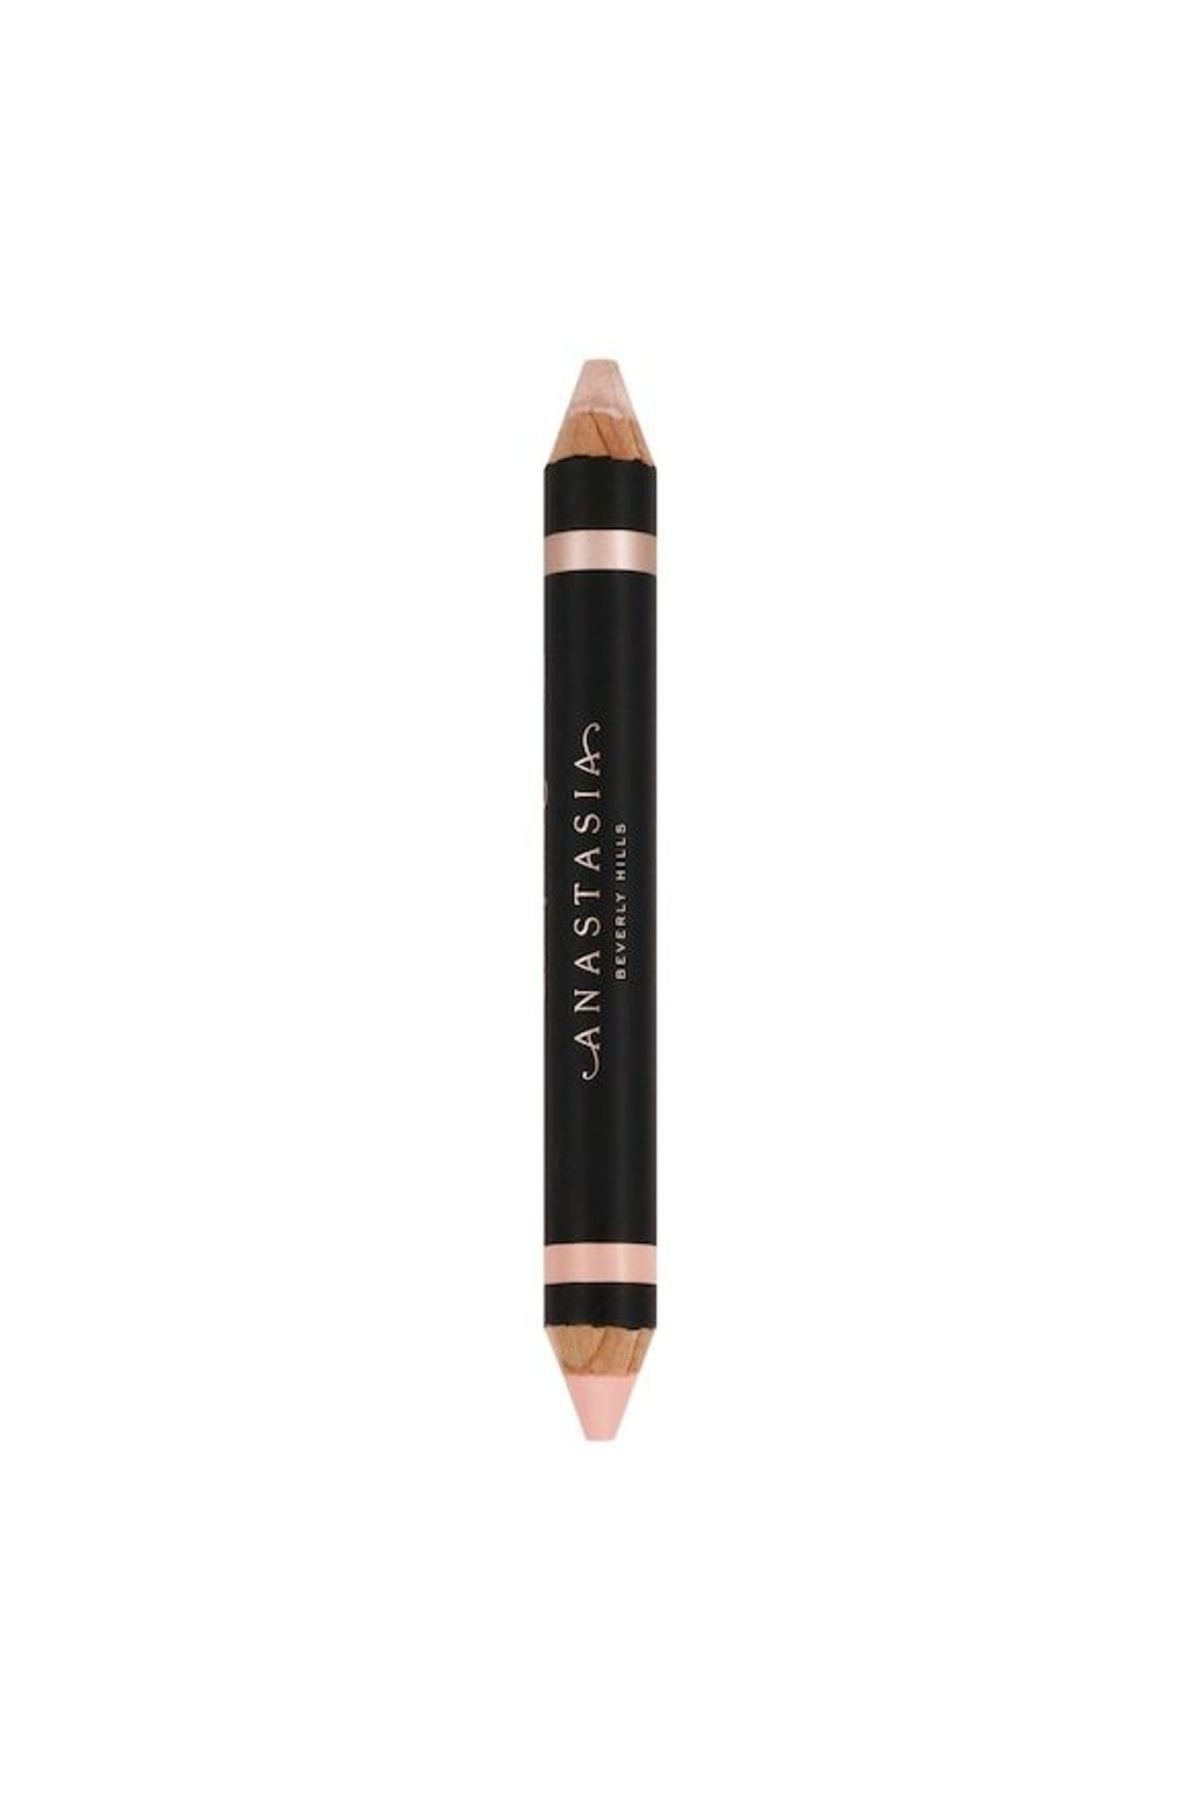 Anastasia Beverly Hills Highlighting Duo Pencil - I?kili Aydınlatıcı Kalem